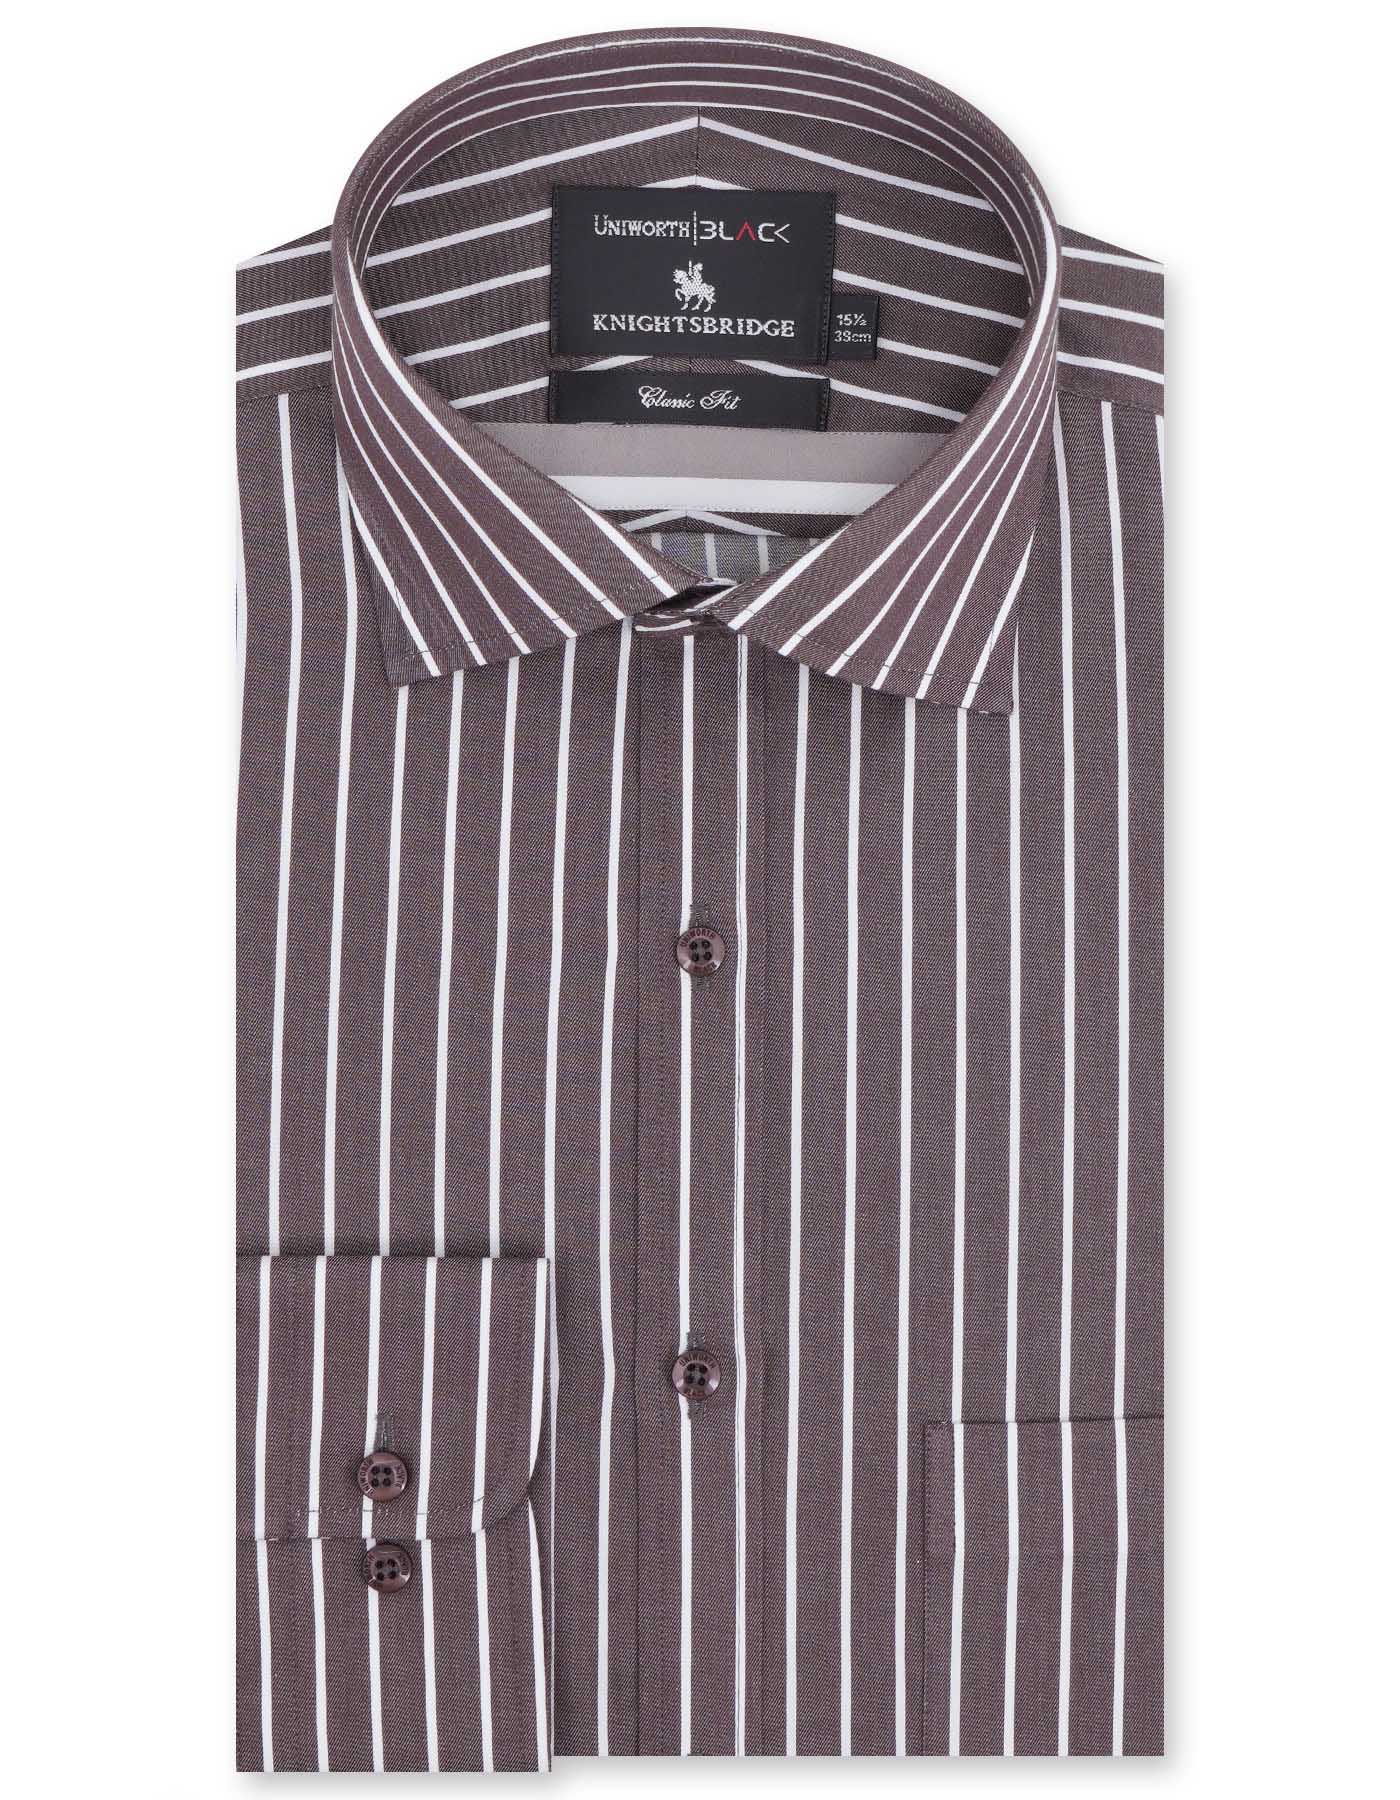 White Brown Stripe Formal Shirt For Men | Uniworth